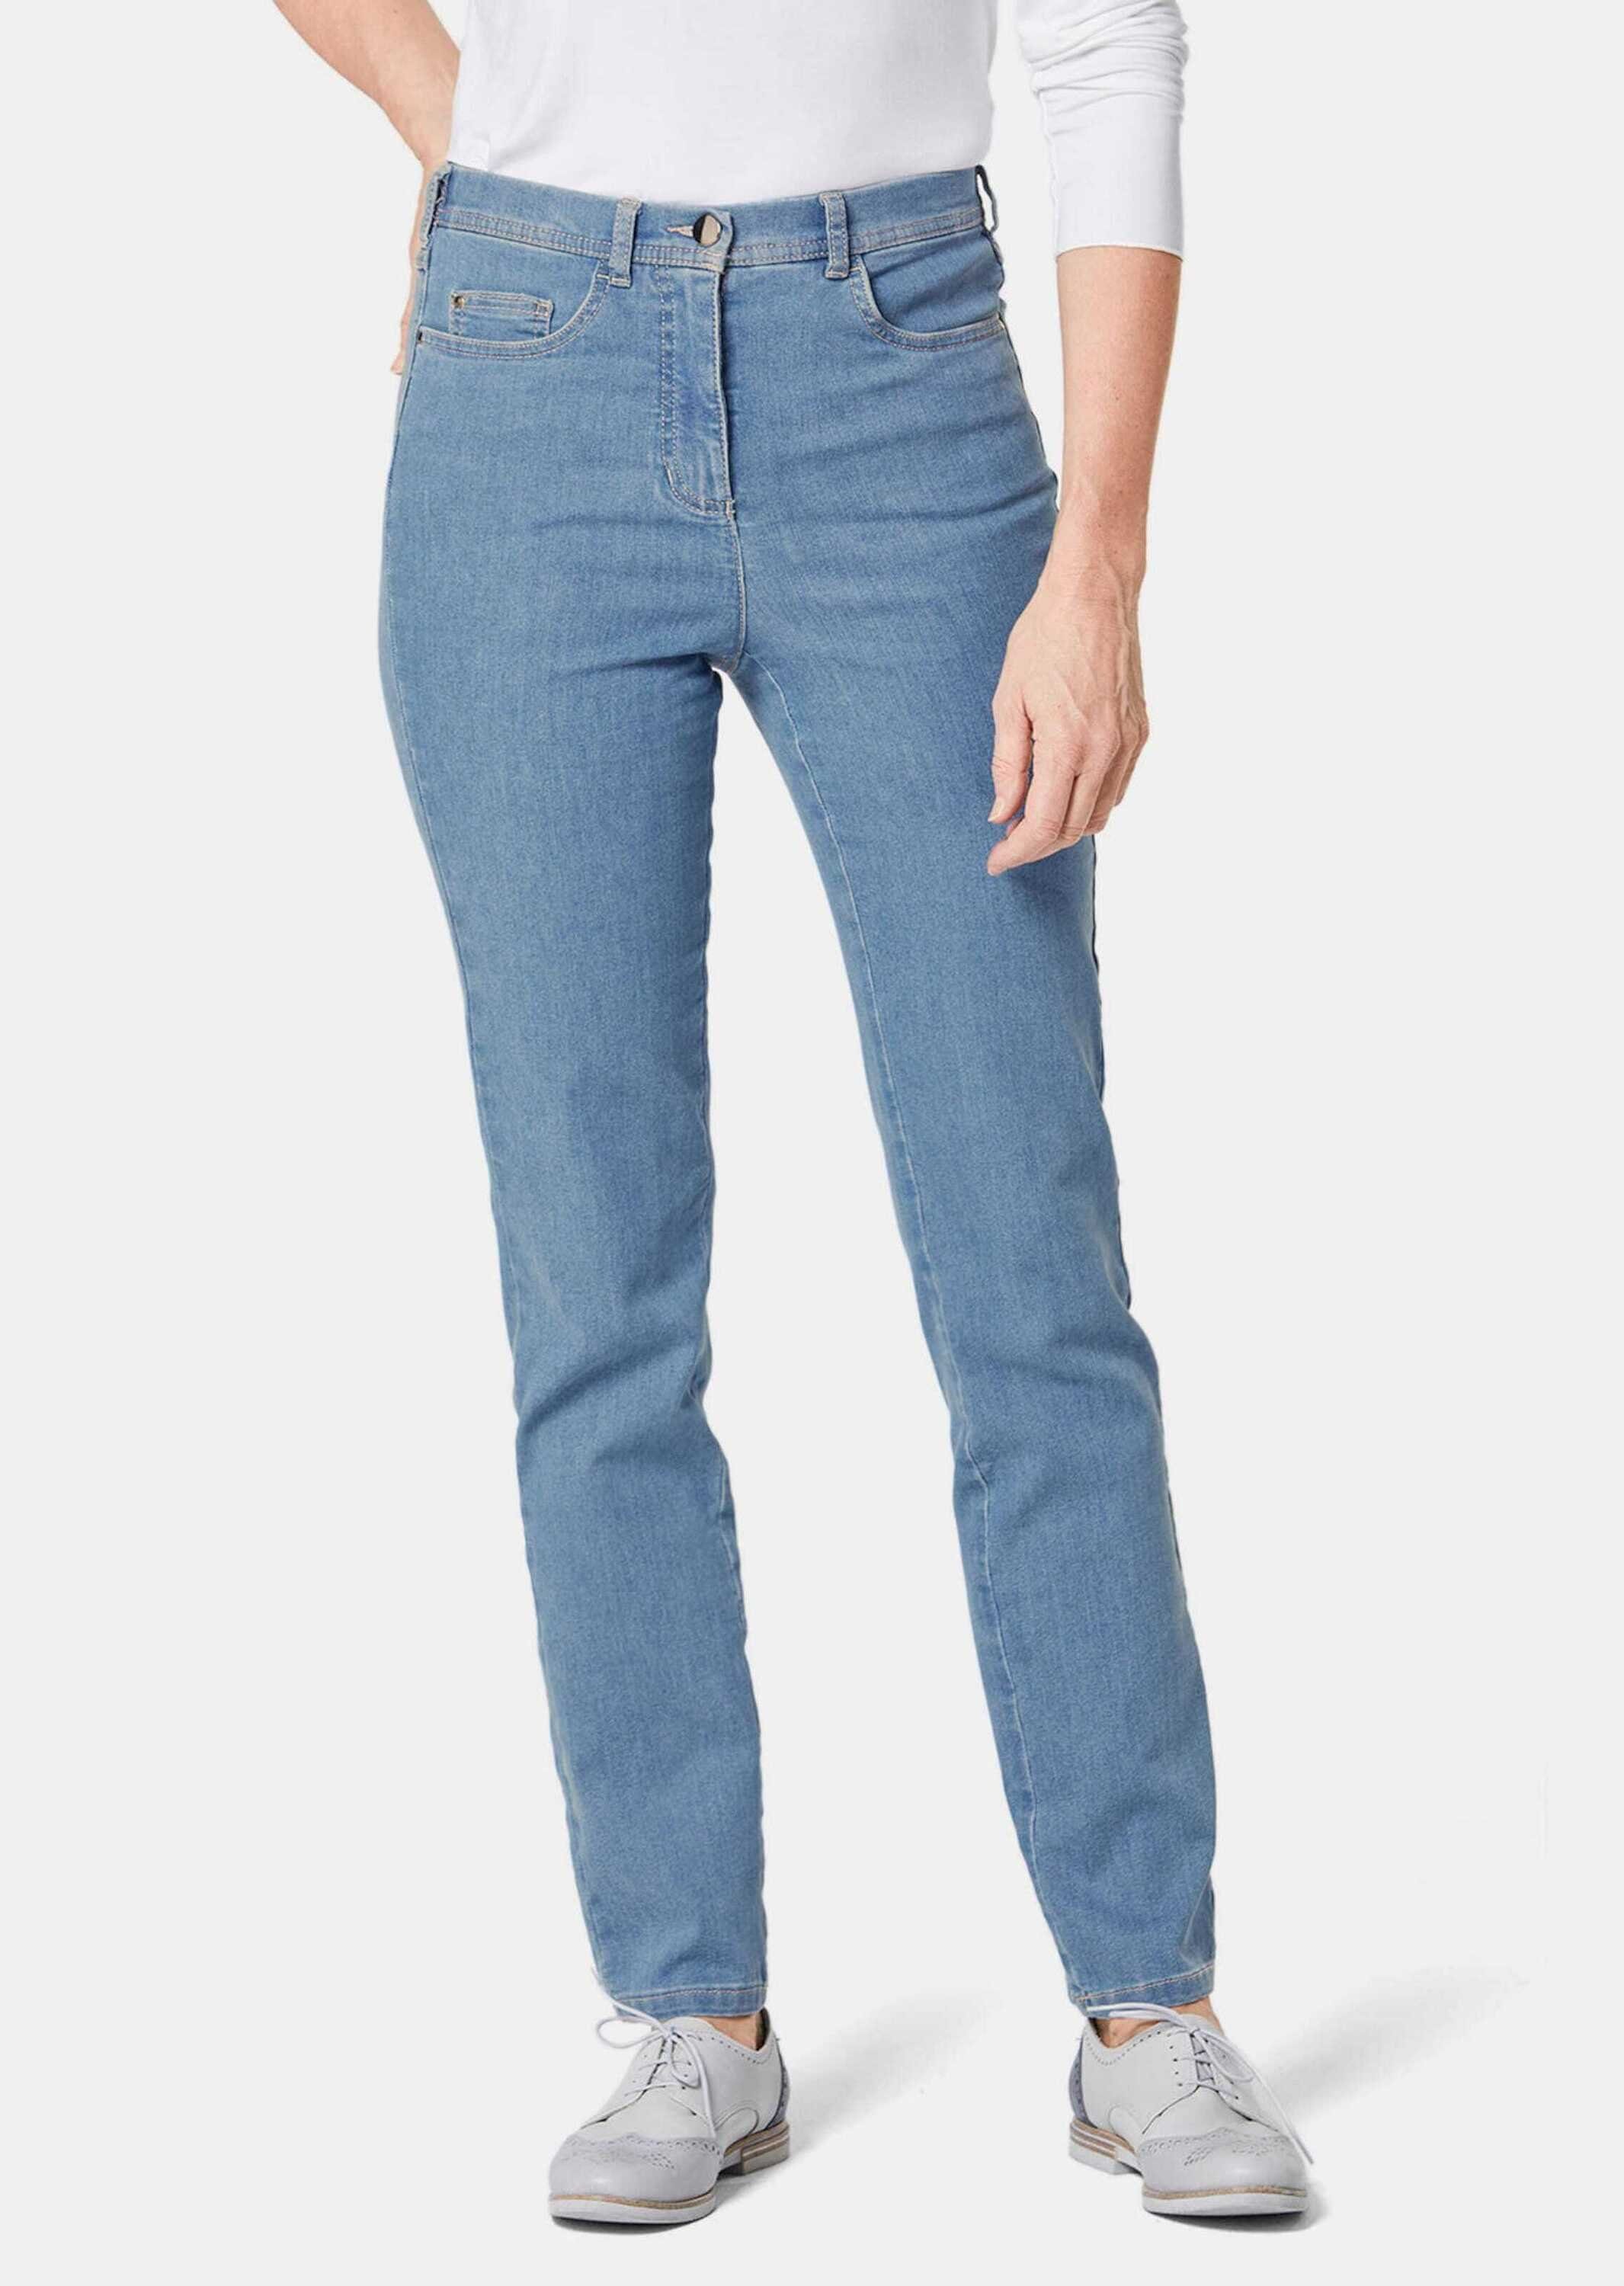 GOLDNER Bequeme Jeans Kurzgröße: Bequeme High-Stretch-Jeanshose hellblau | Slim-Fit Jeans